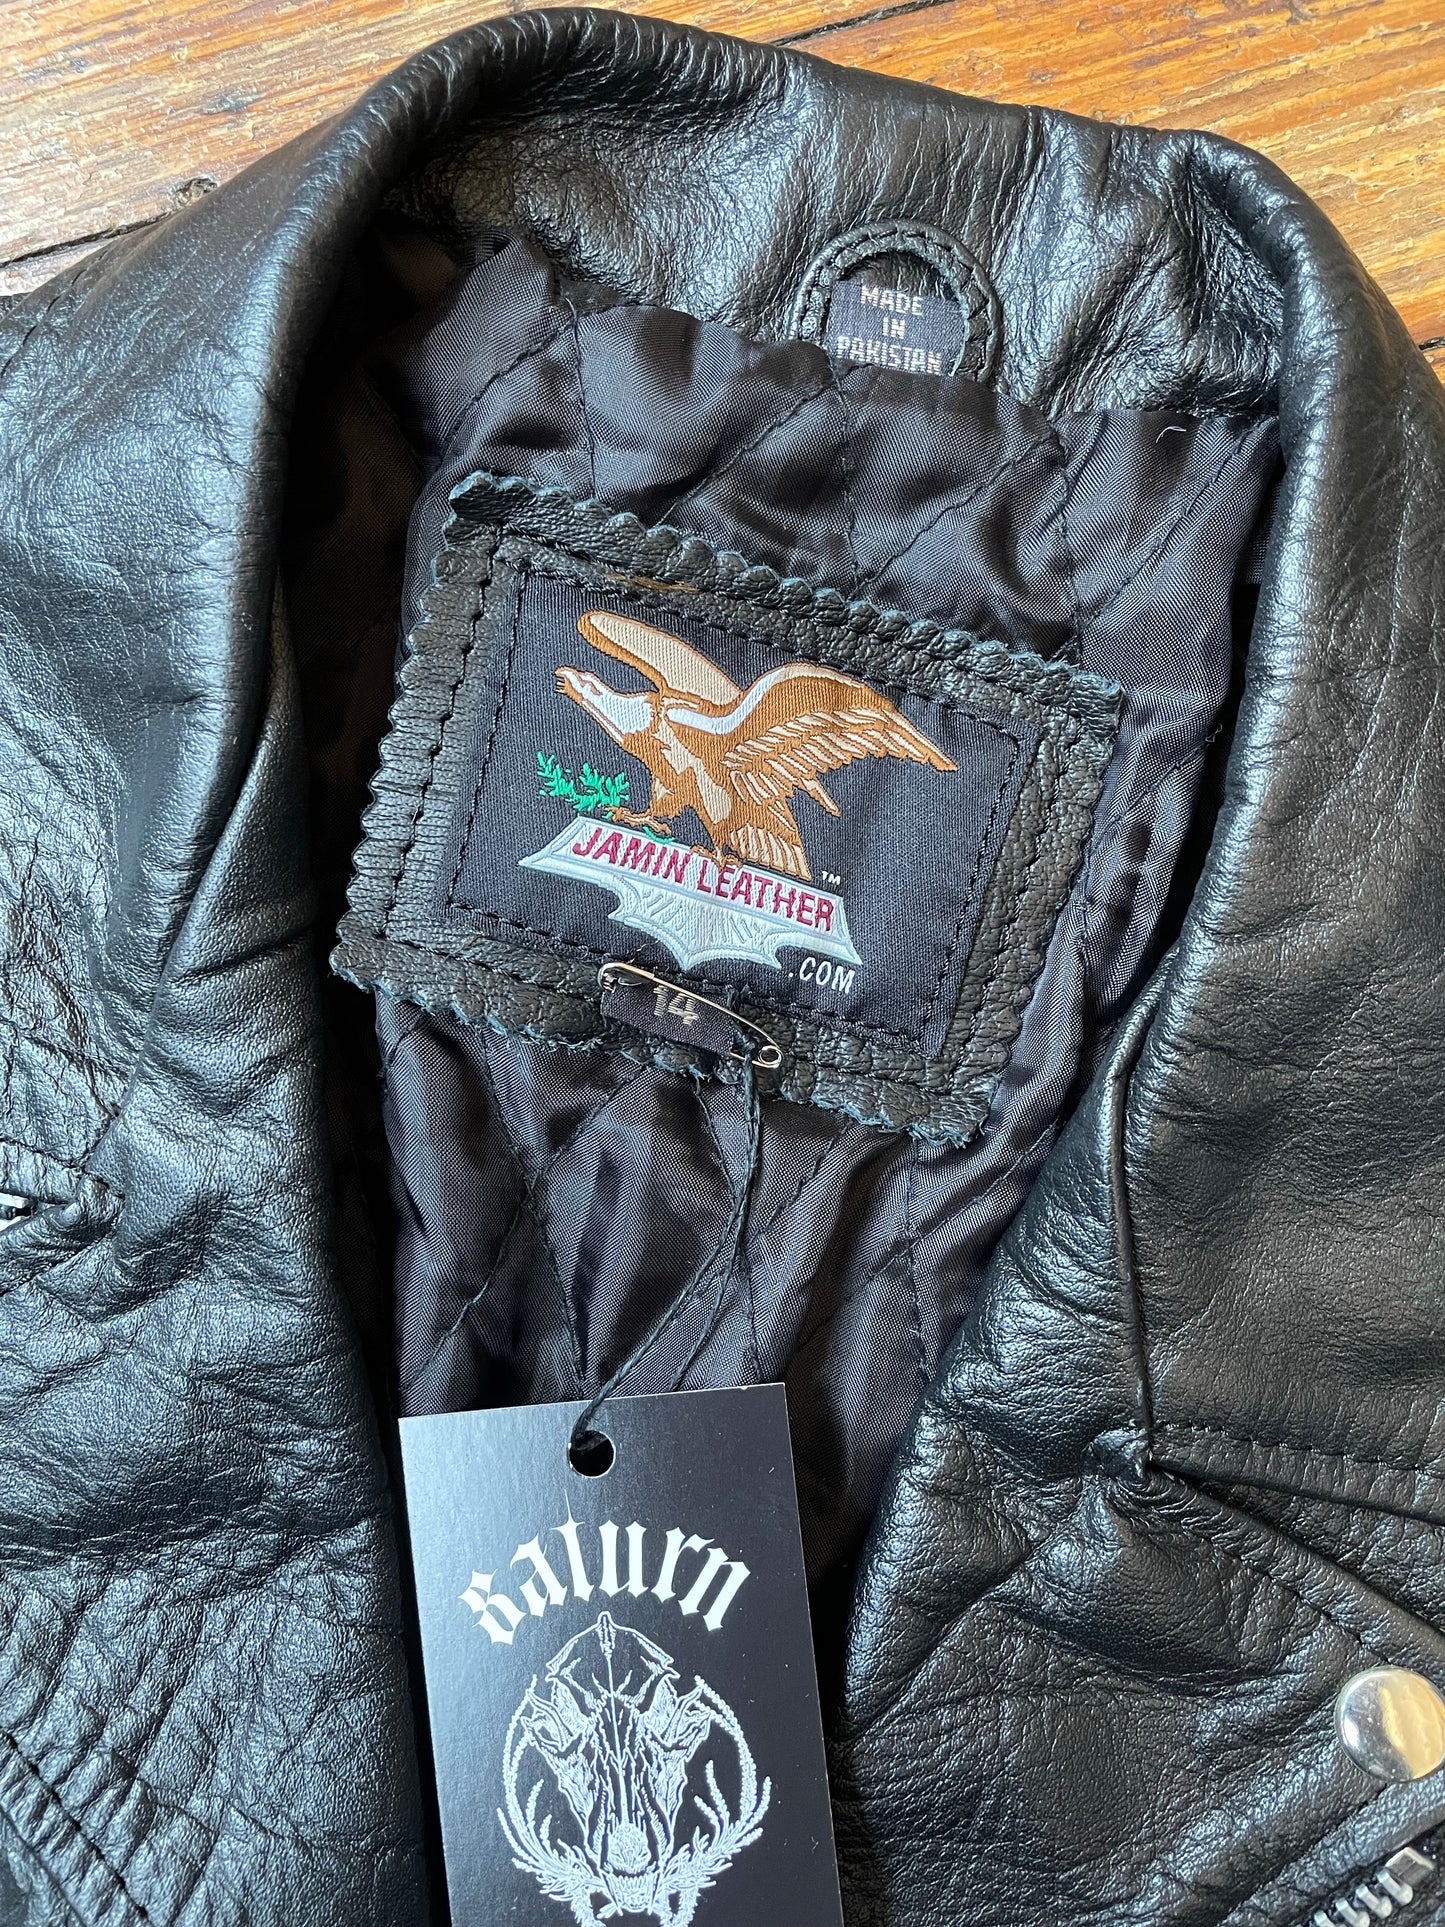 Classic Jamin Leather Motorcycle Jacket